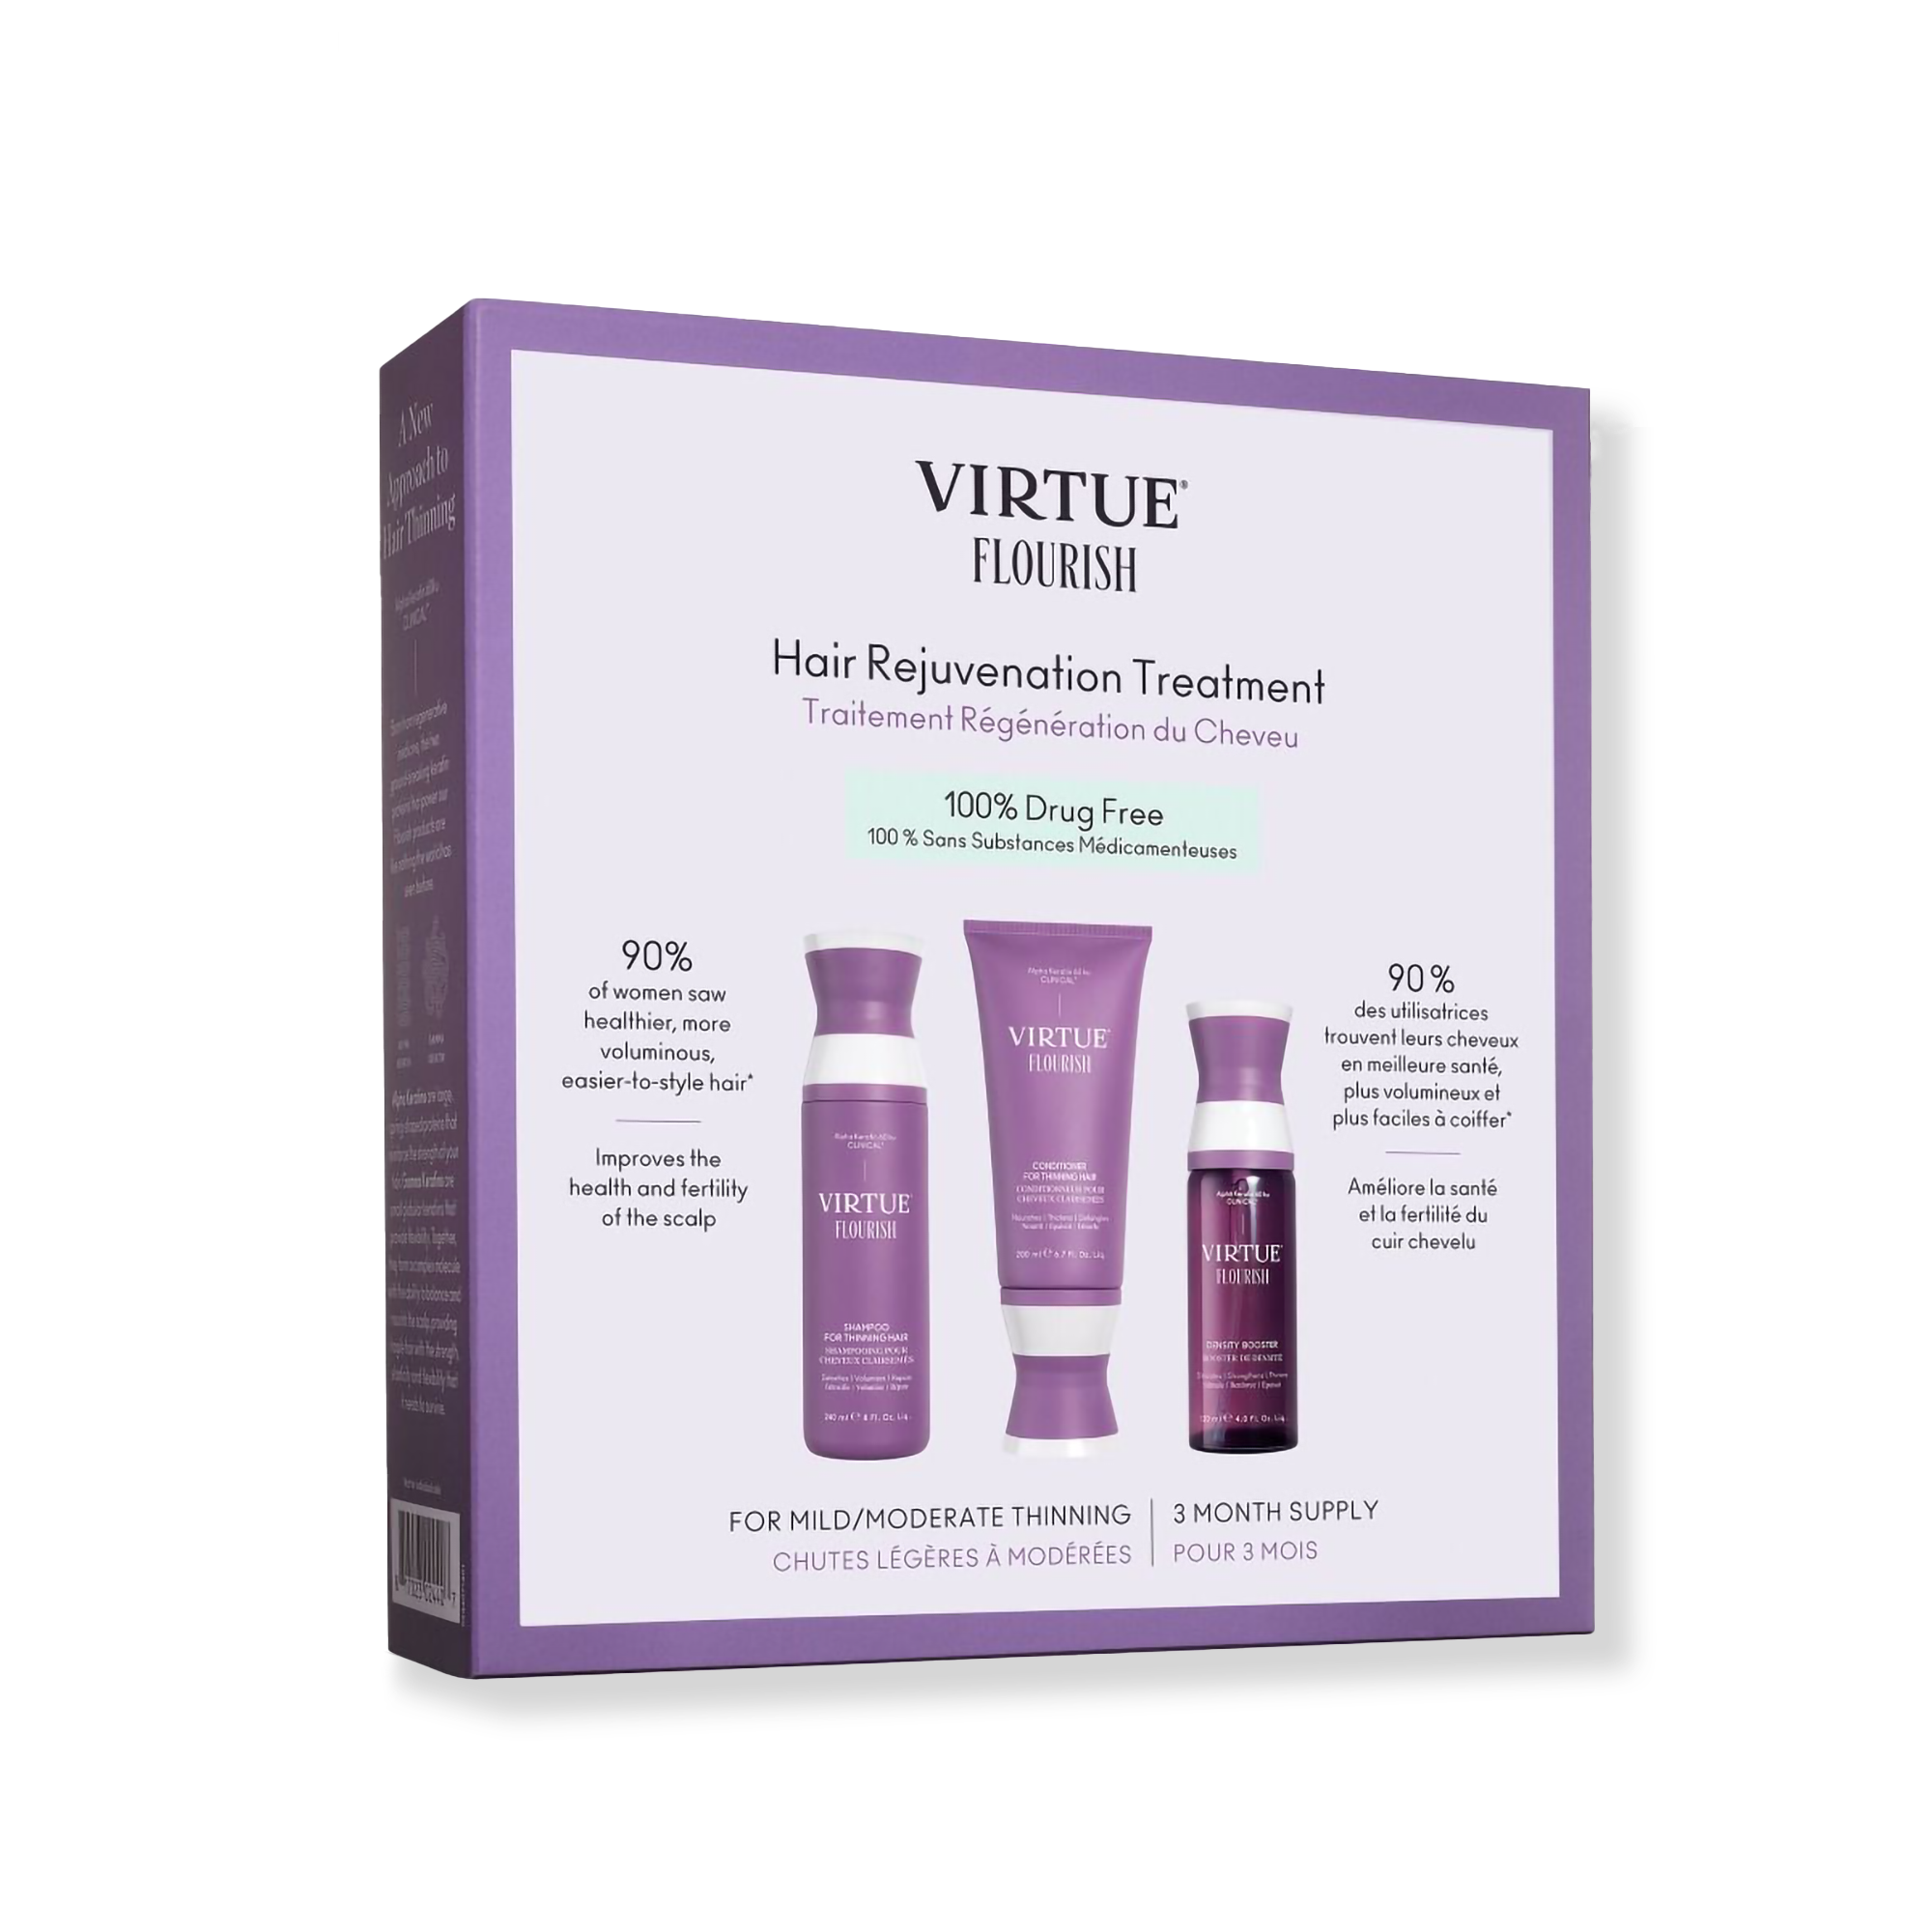 Virtue Flourish Nightly Intensive Hair Rejuvenation Treatment Drug Free 90 Day / KIT